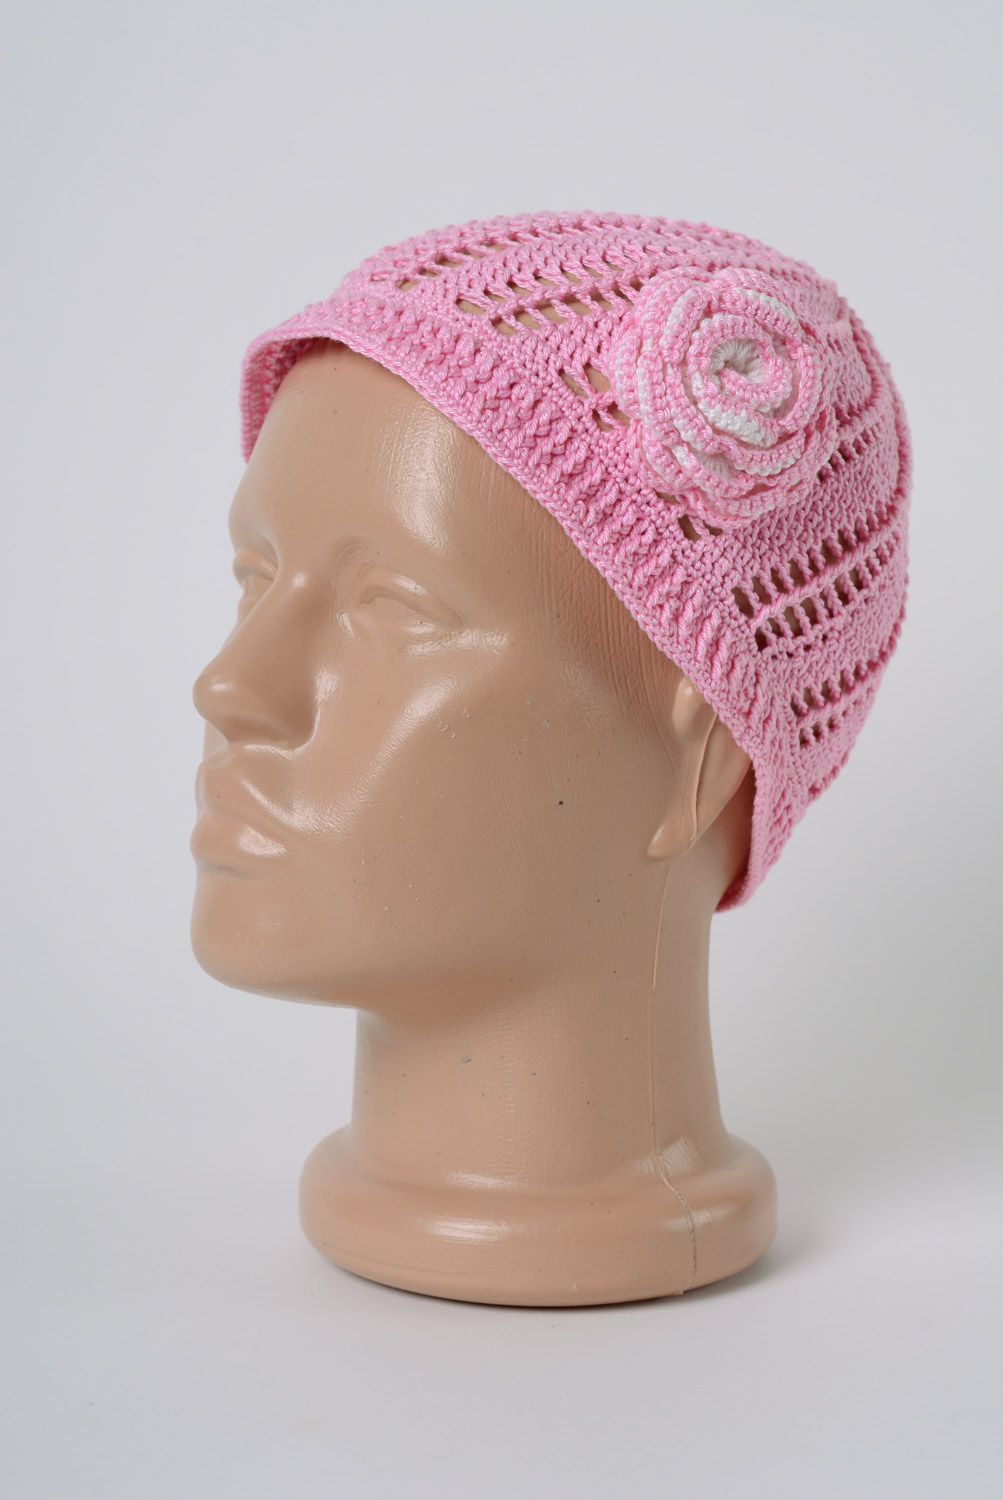 Ажурная шапочка для девочки розовая с цветком вязаная крючком ручная работа  фото 1